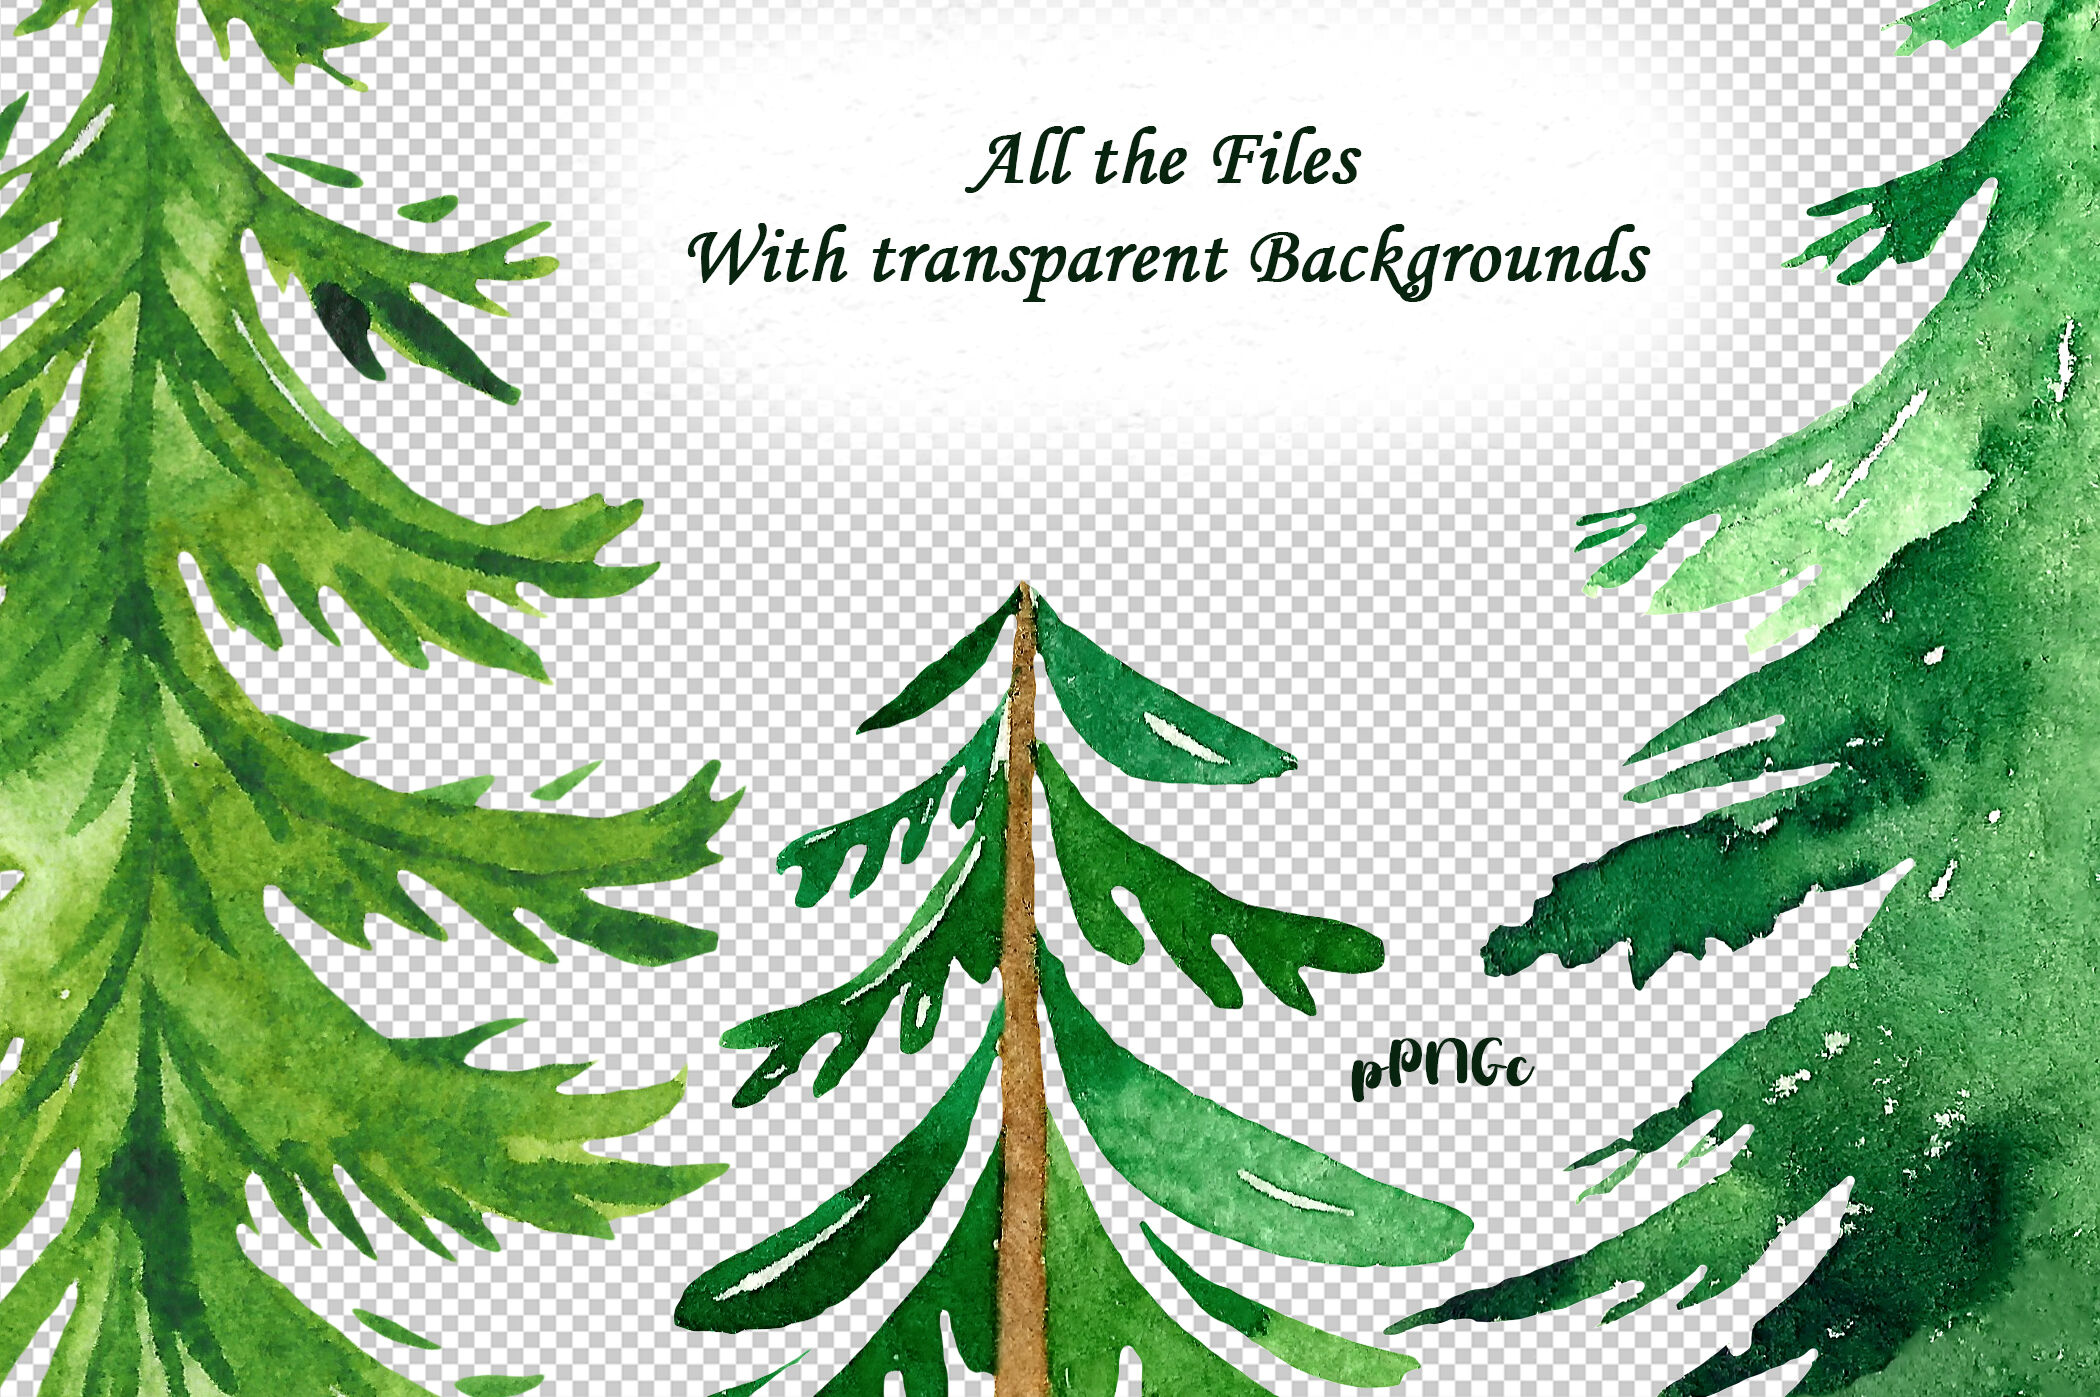 pine trees clip art